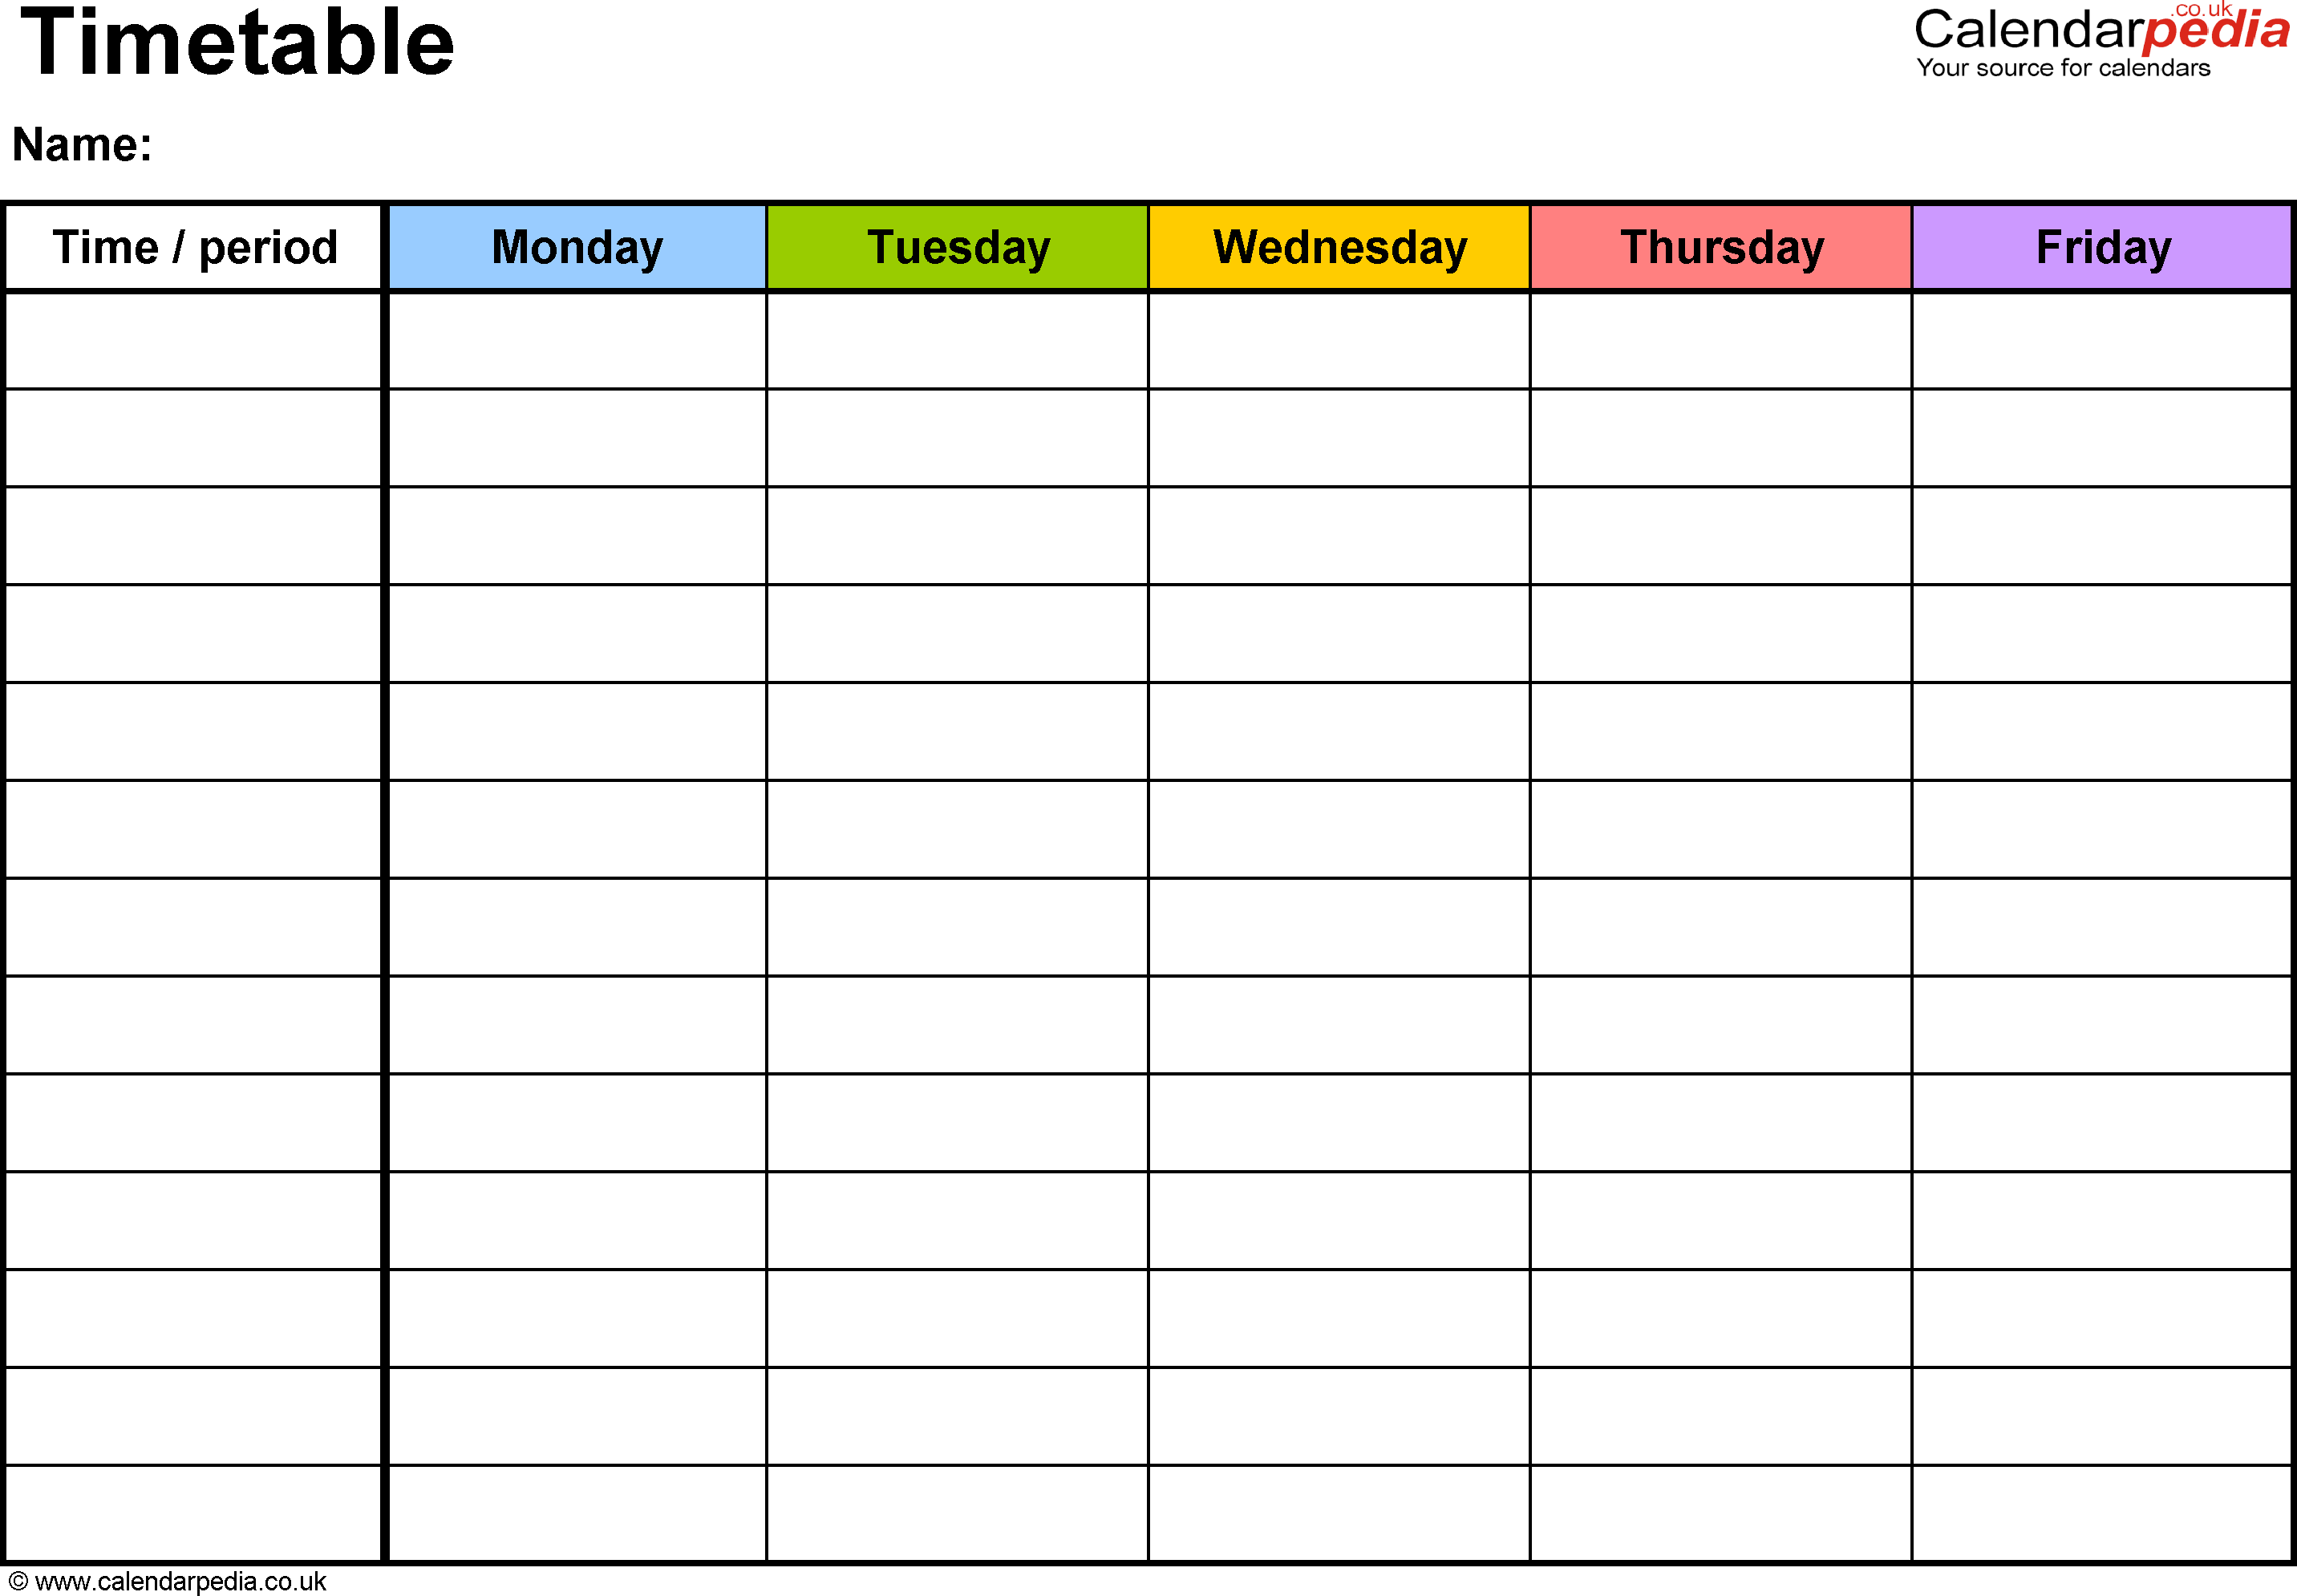 Timetable Templates For Microsoft Word Free And Printable